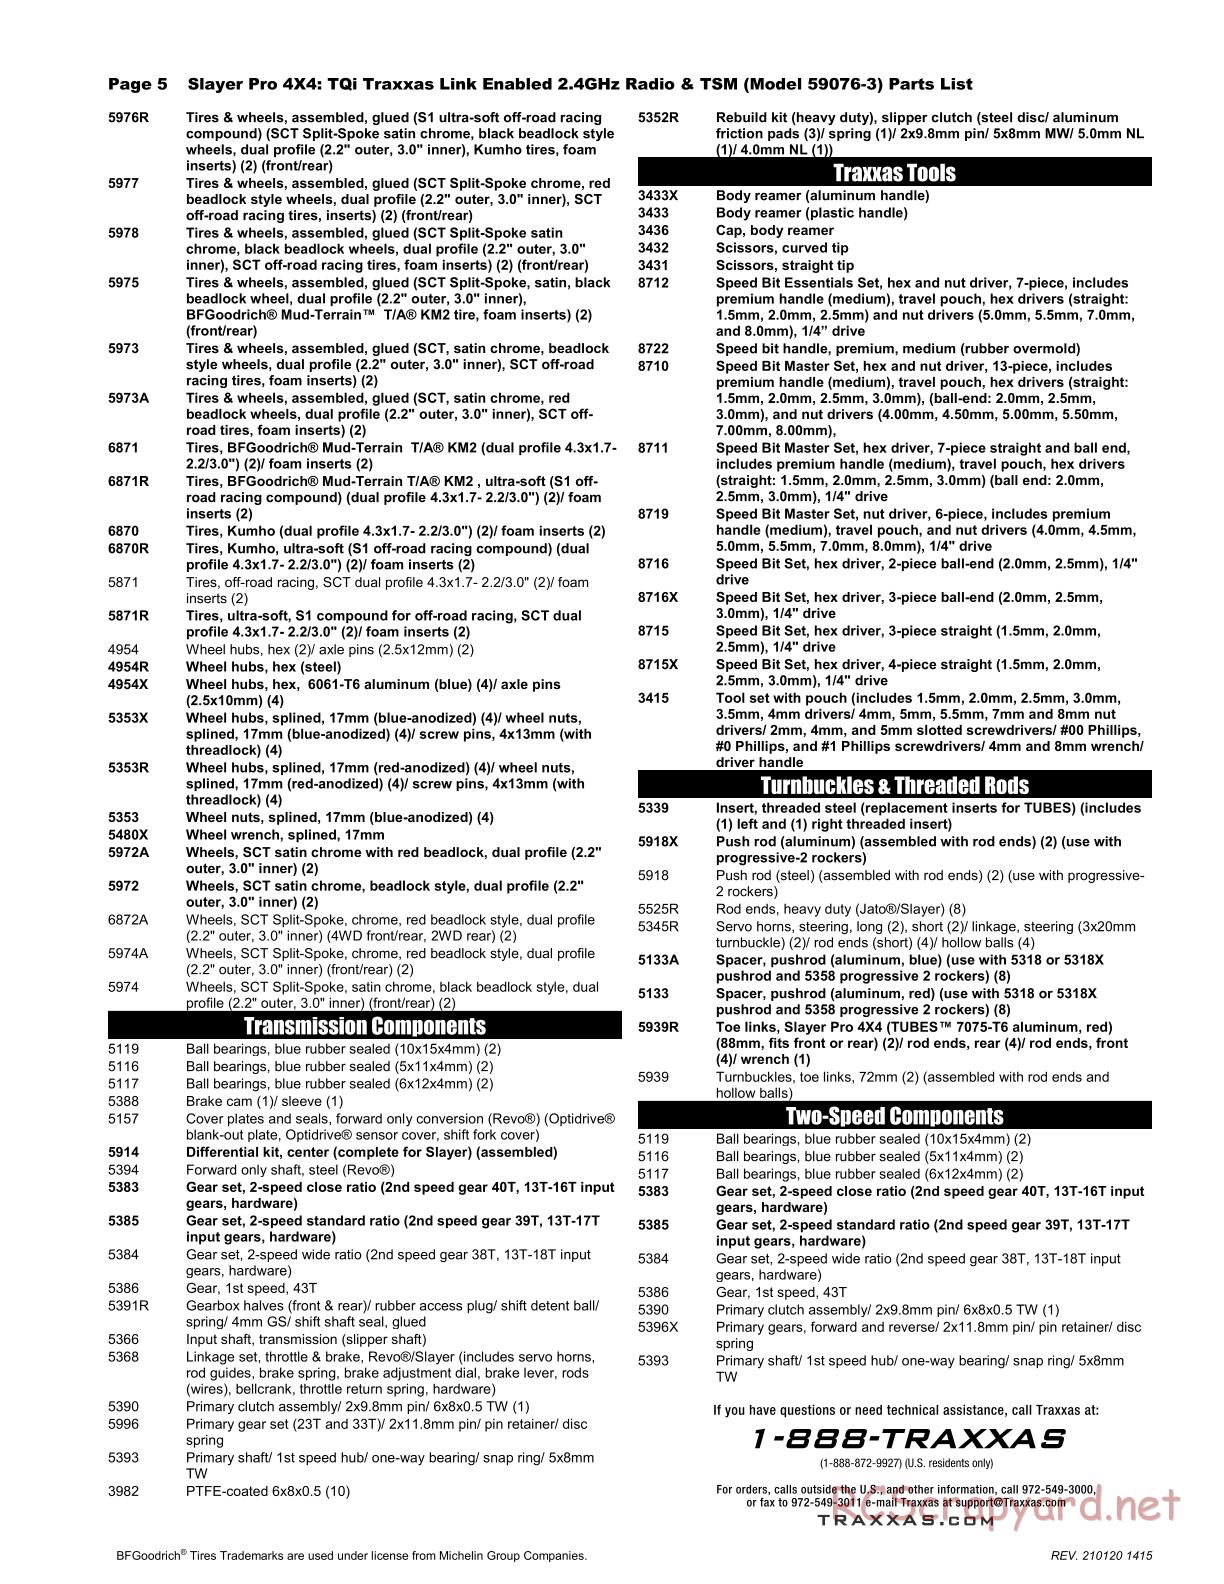 Traxxas - Slayer Pro 4x4 TSM - Parts List - Page 5